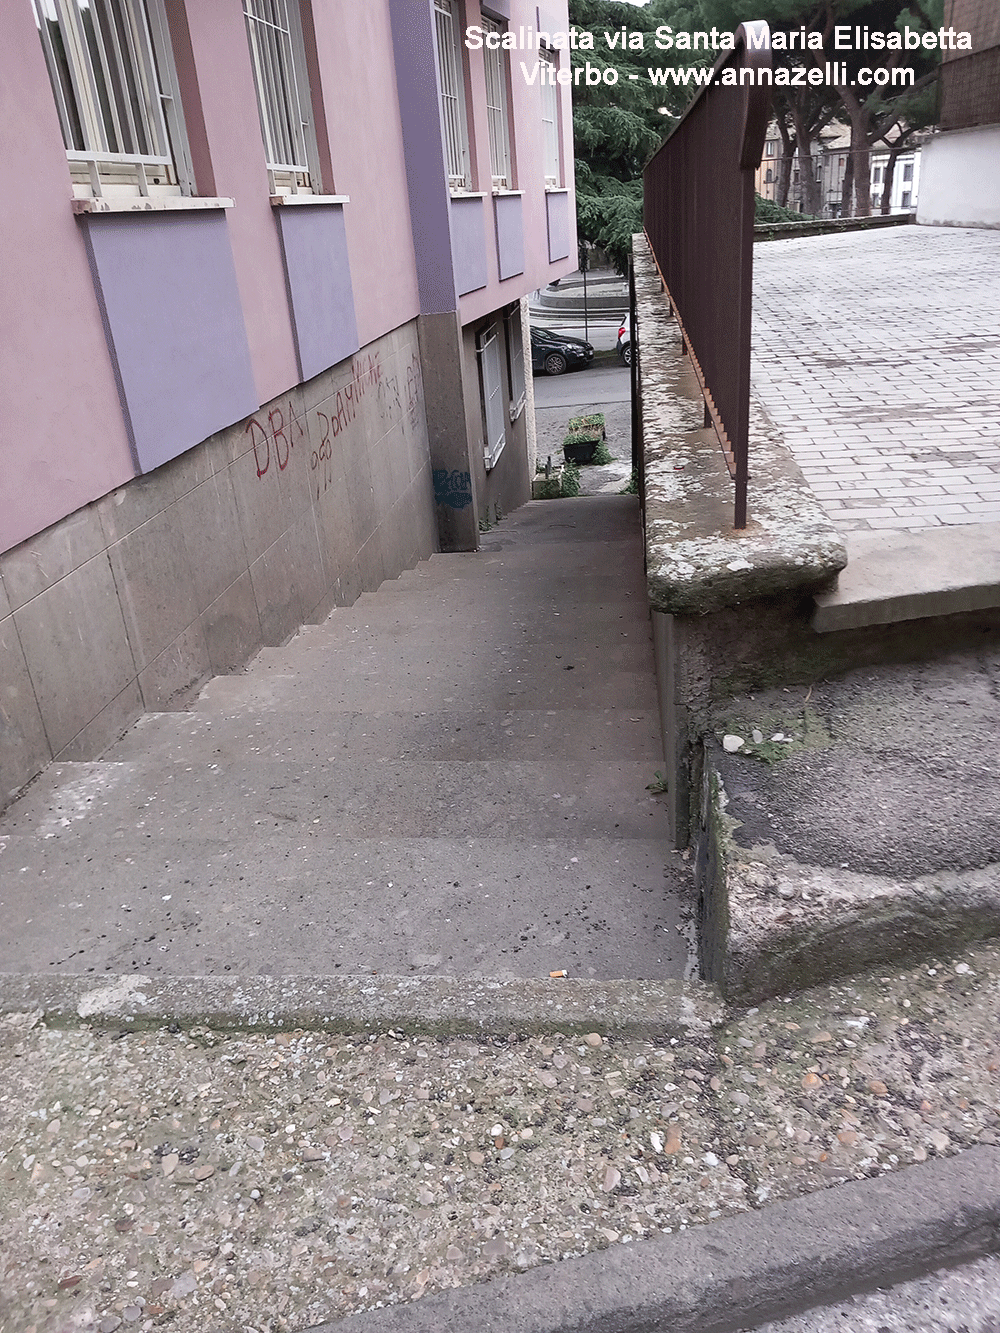 scalinata a via santa maria elisabetta viterbo centro info e foto anna zelli